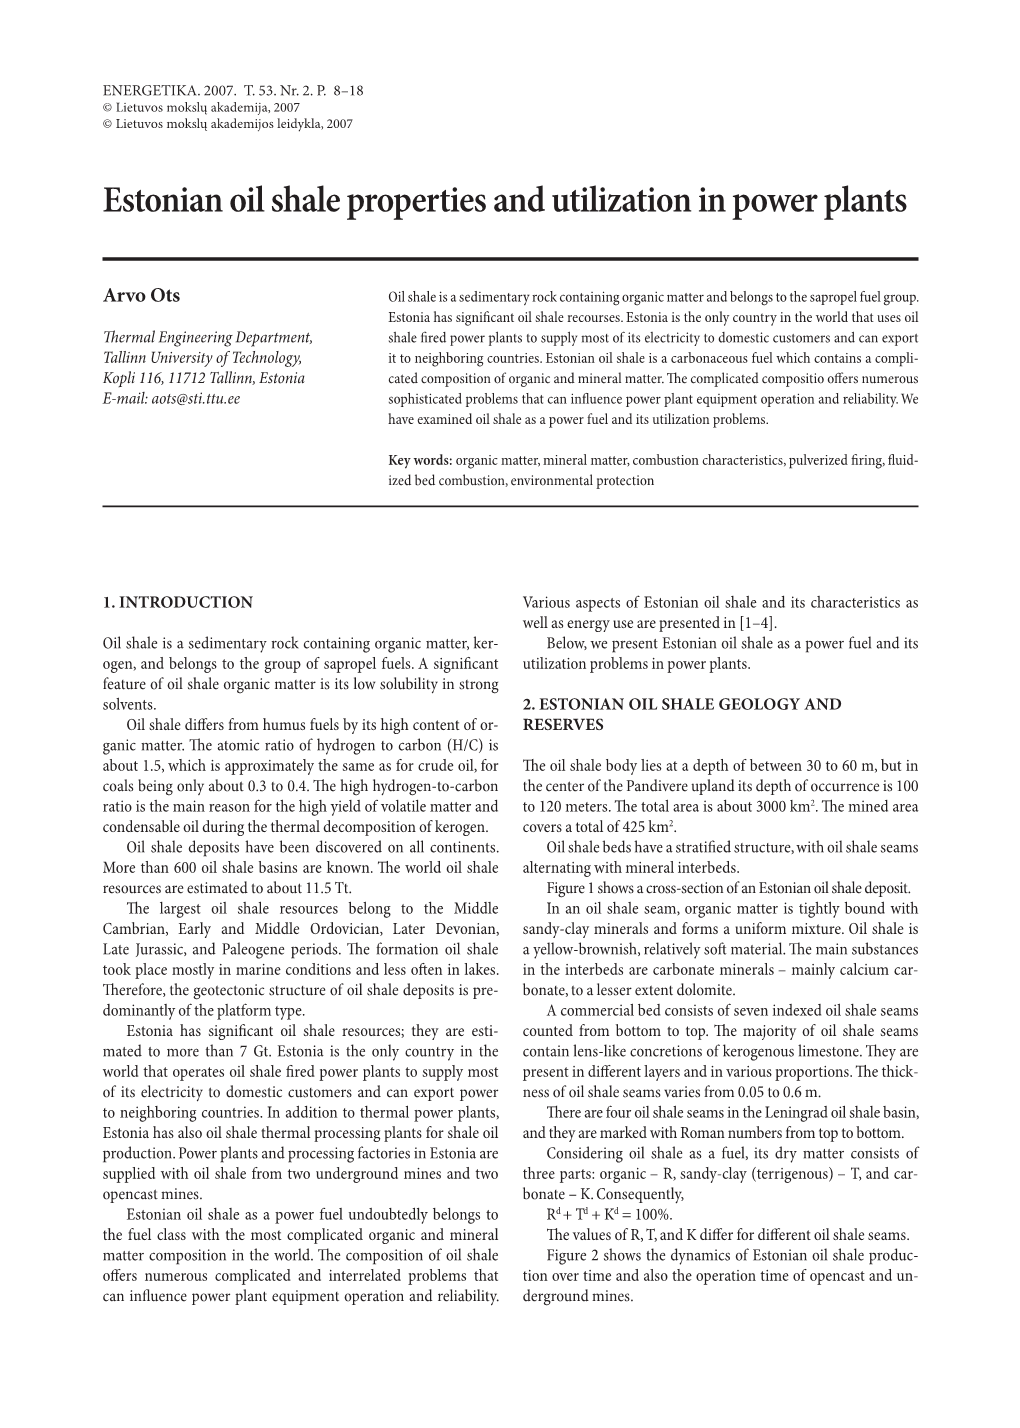 Estonian Oil Shale Properties and Utilization in Power Plants